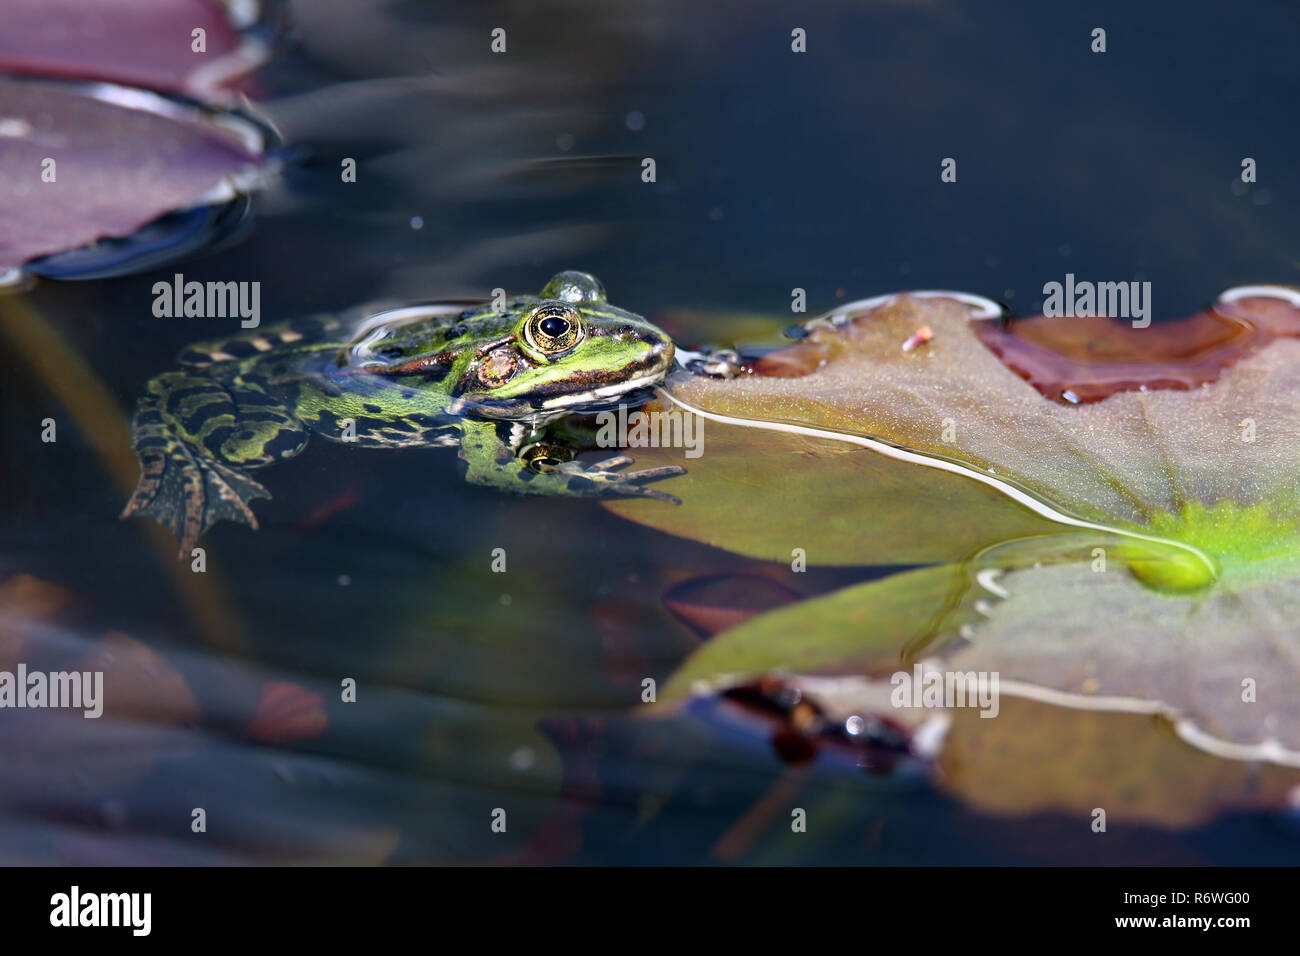 pond frog pelophylax esculenta on lily pad Stock Photo